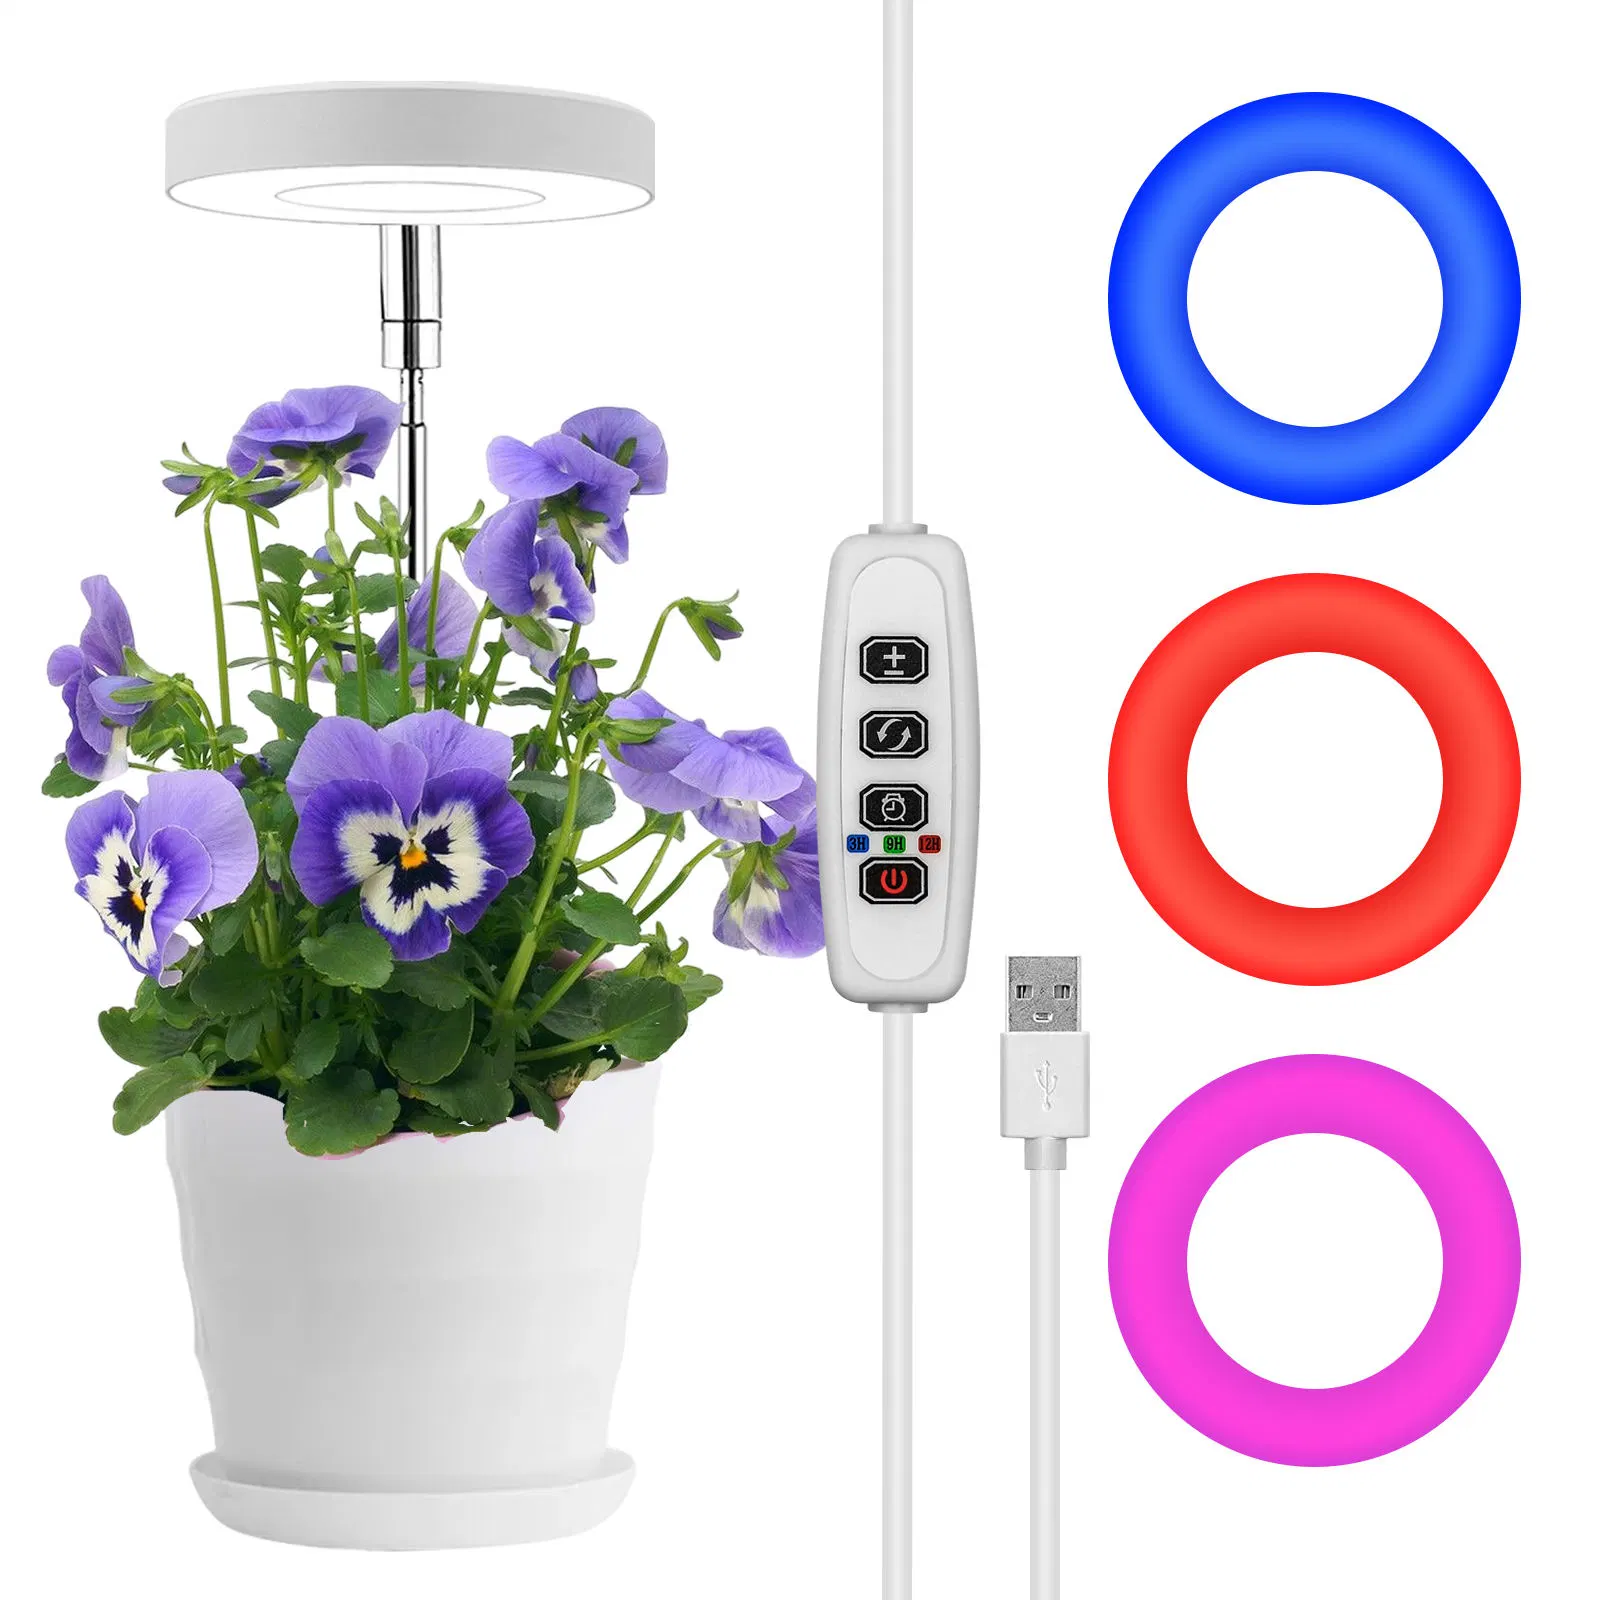 USB Round Ring Timing Dimming Телескопический Flower Plant Fill LED GROW Light (свет роста